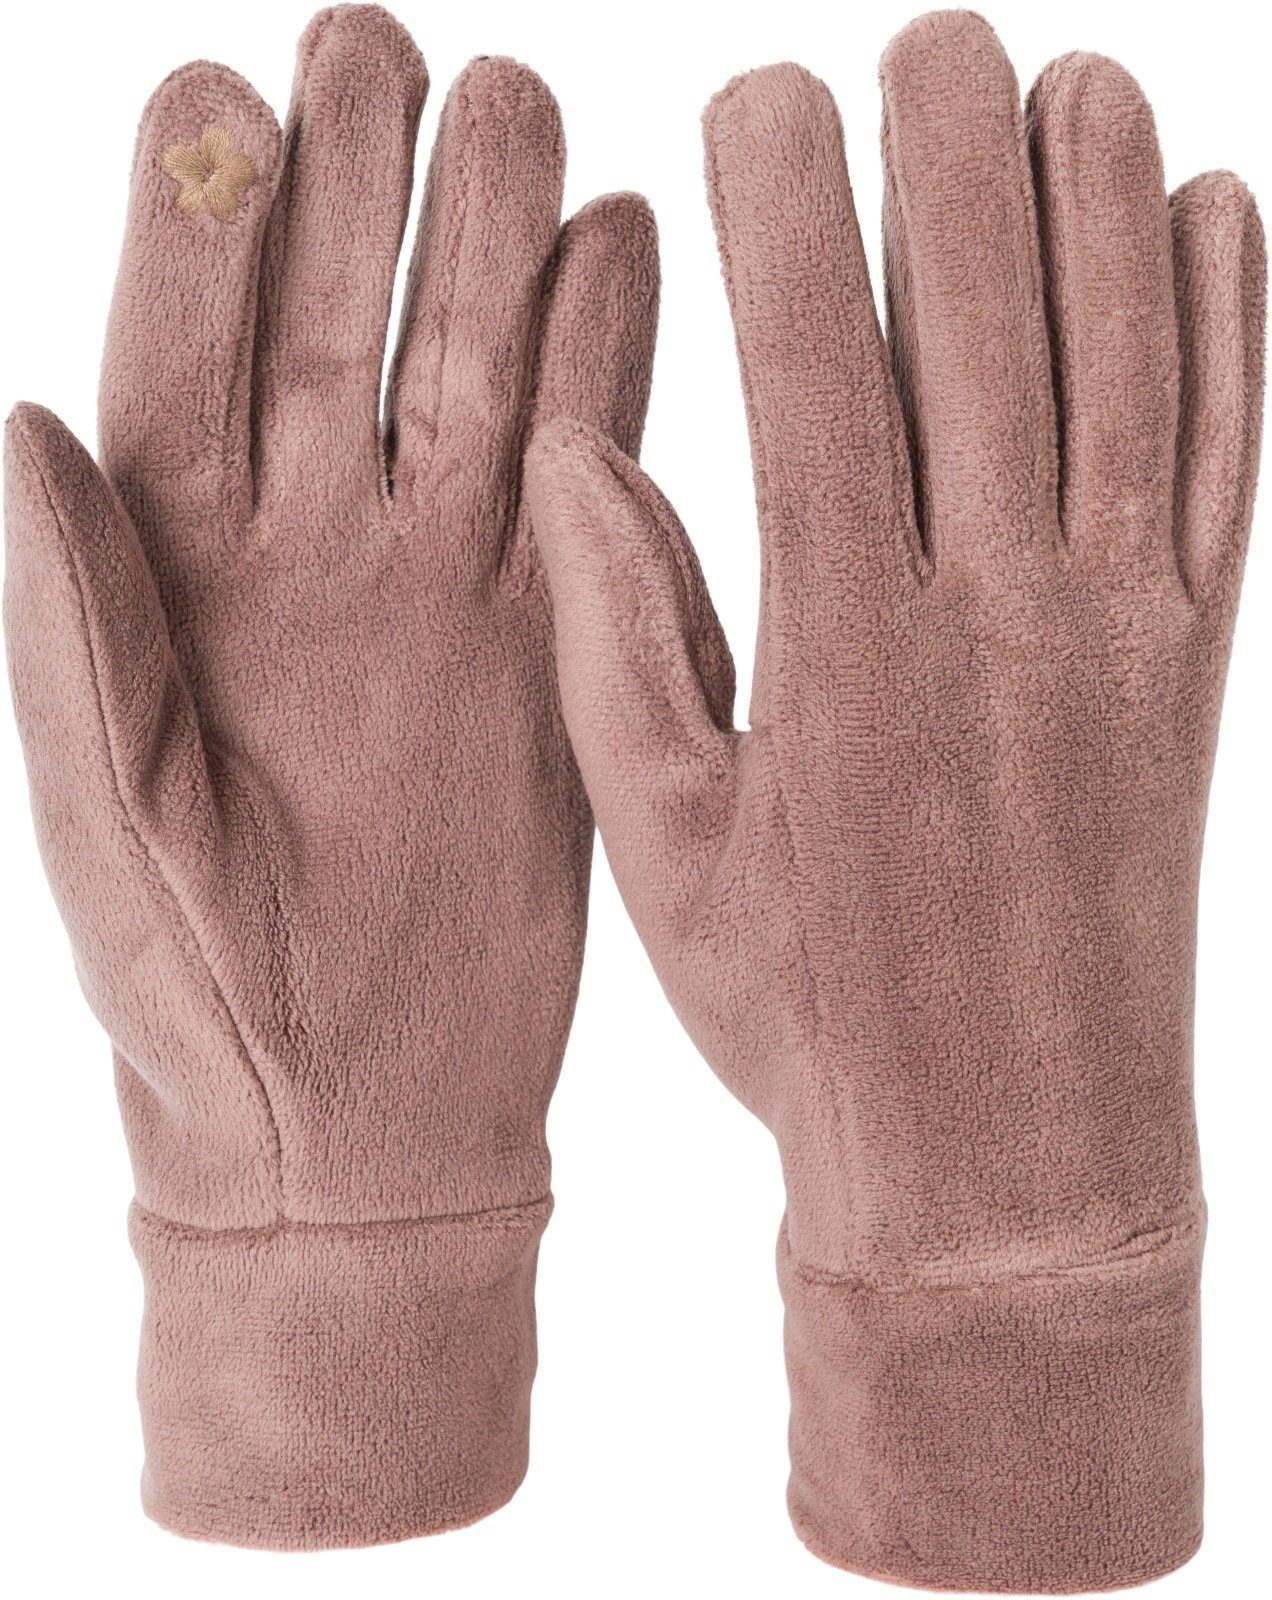 styleBREAKER Fleecehandschuhe Einfarbige Touchscreen Fleece Handschuhe Mokkabraun